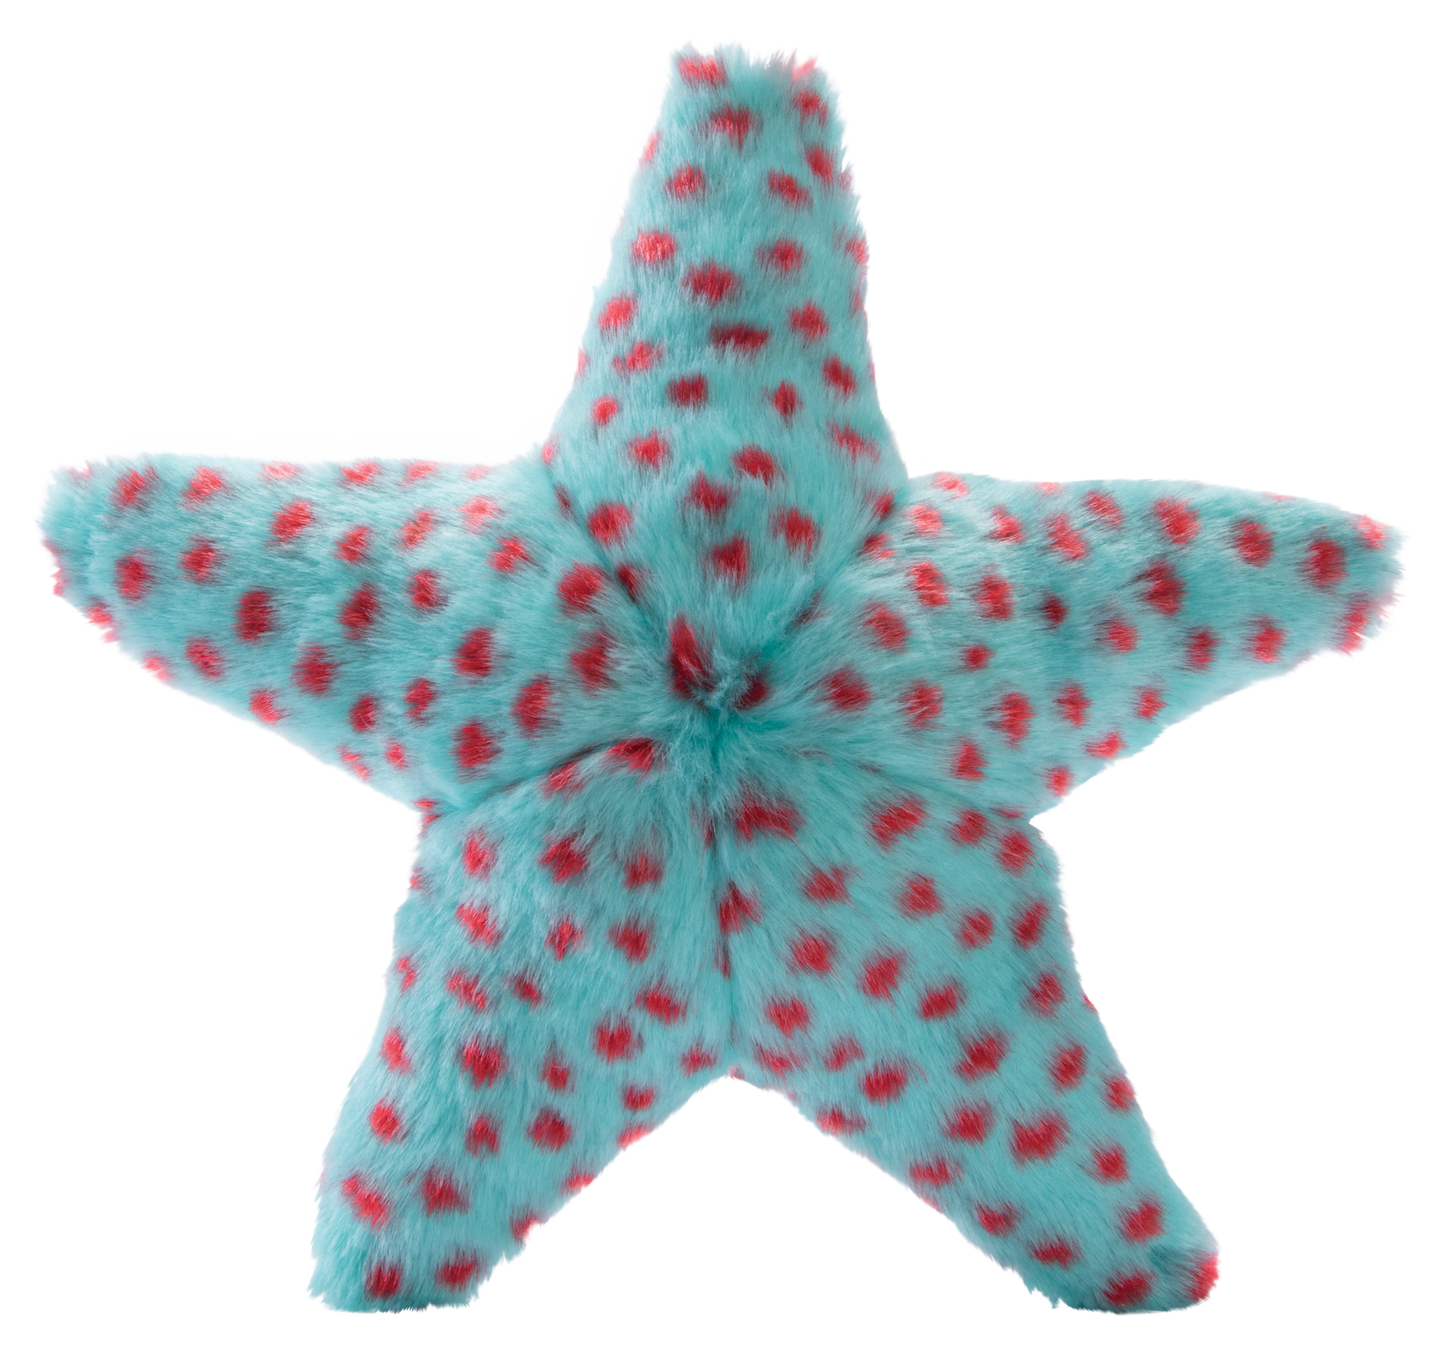 Ally Starfish - Crinkle & Squeaker